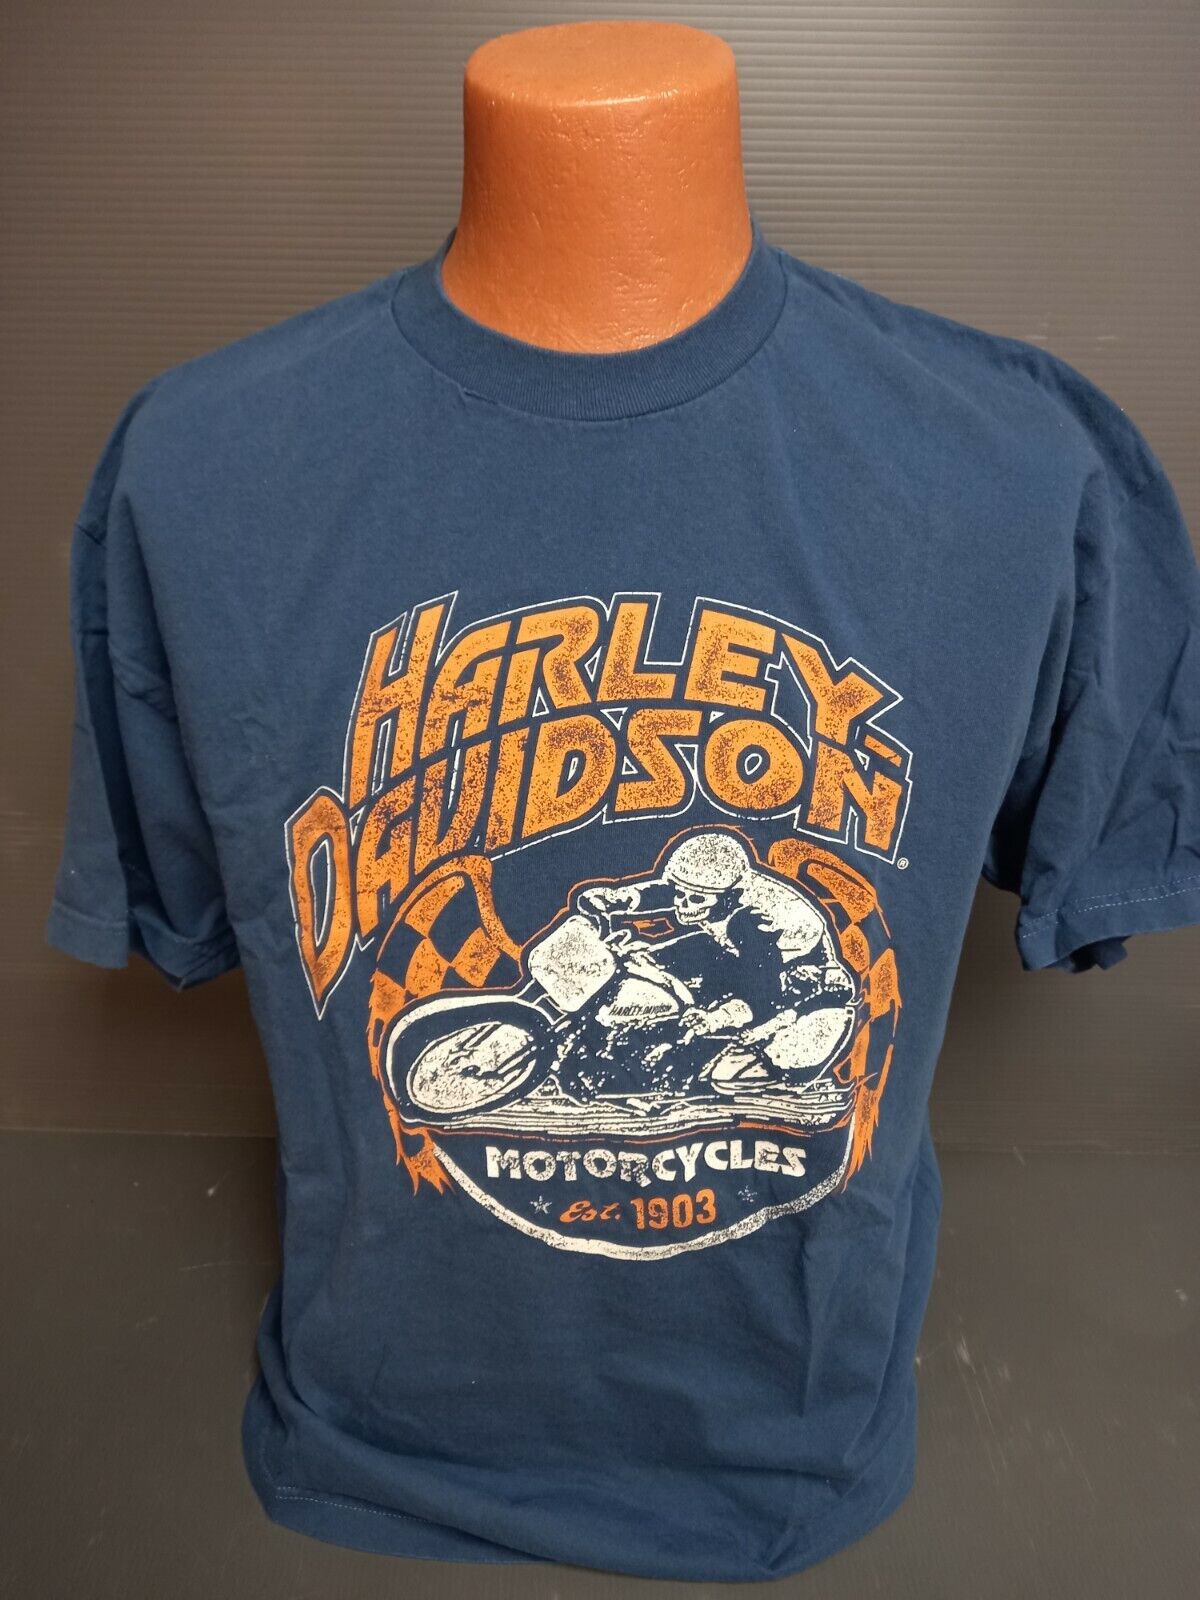 2015 Harley Davidson XL T-Shirt Fort Worth Texas